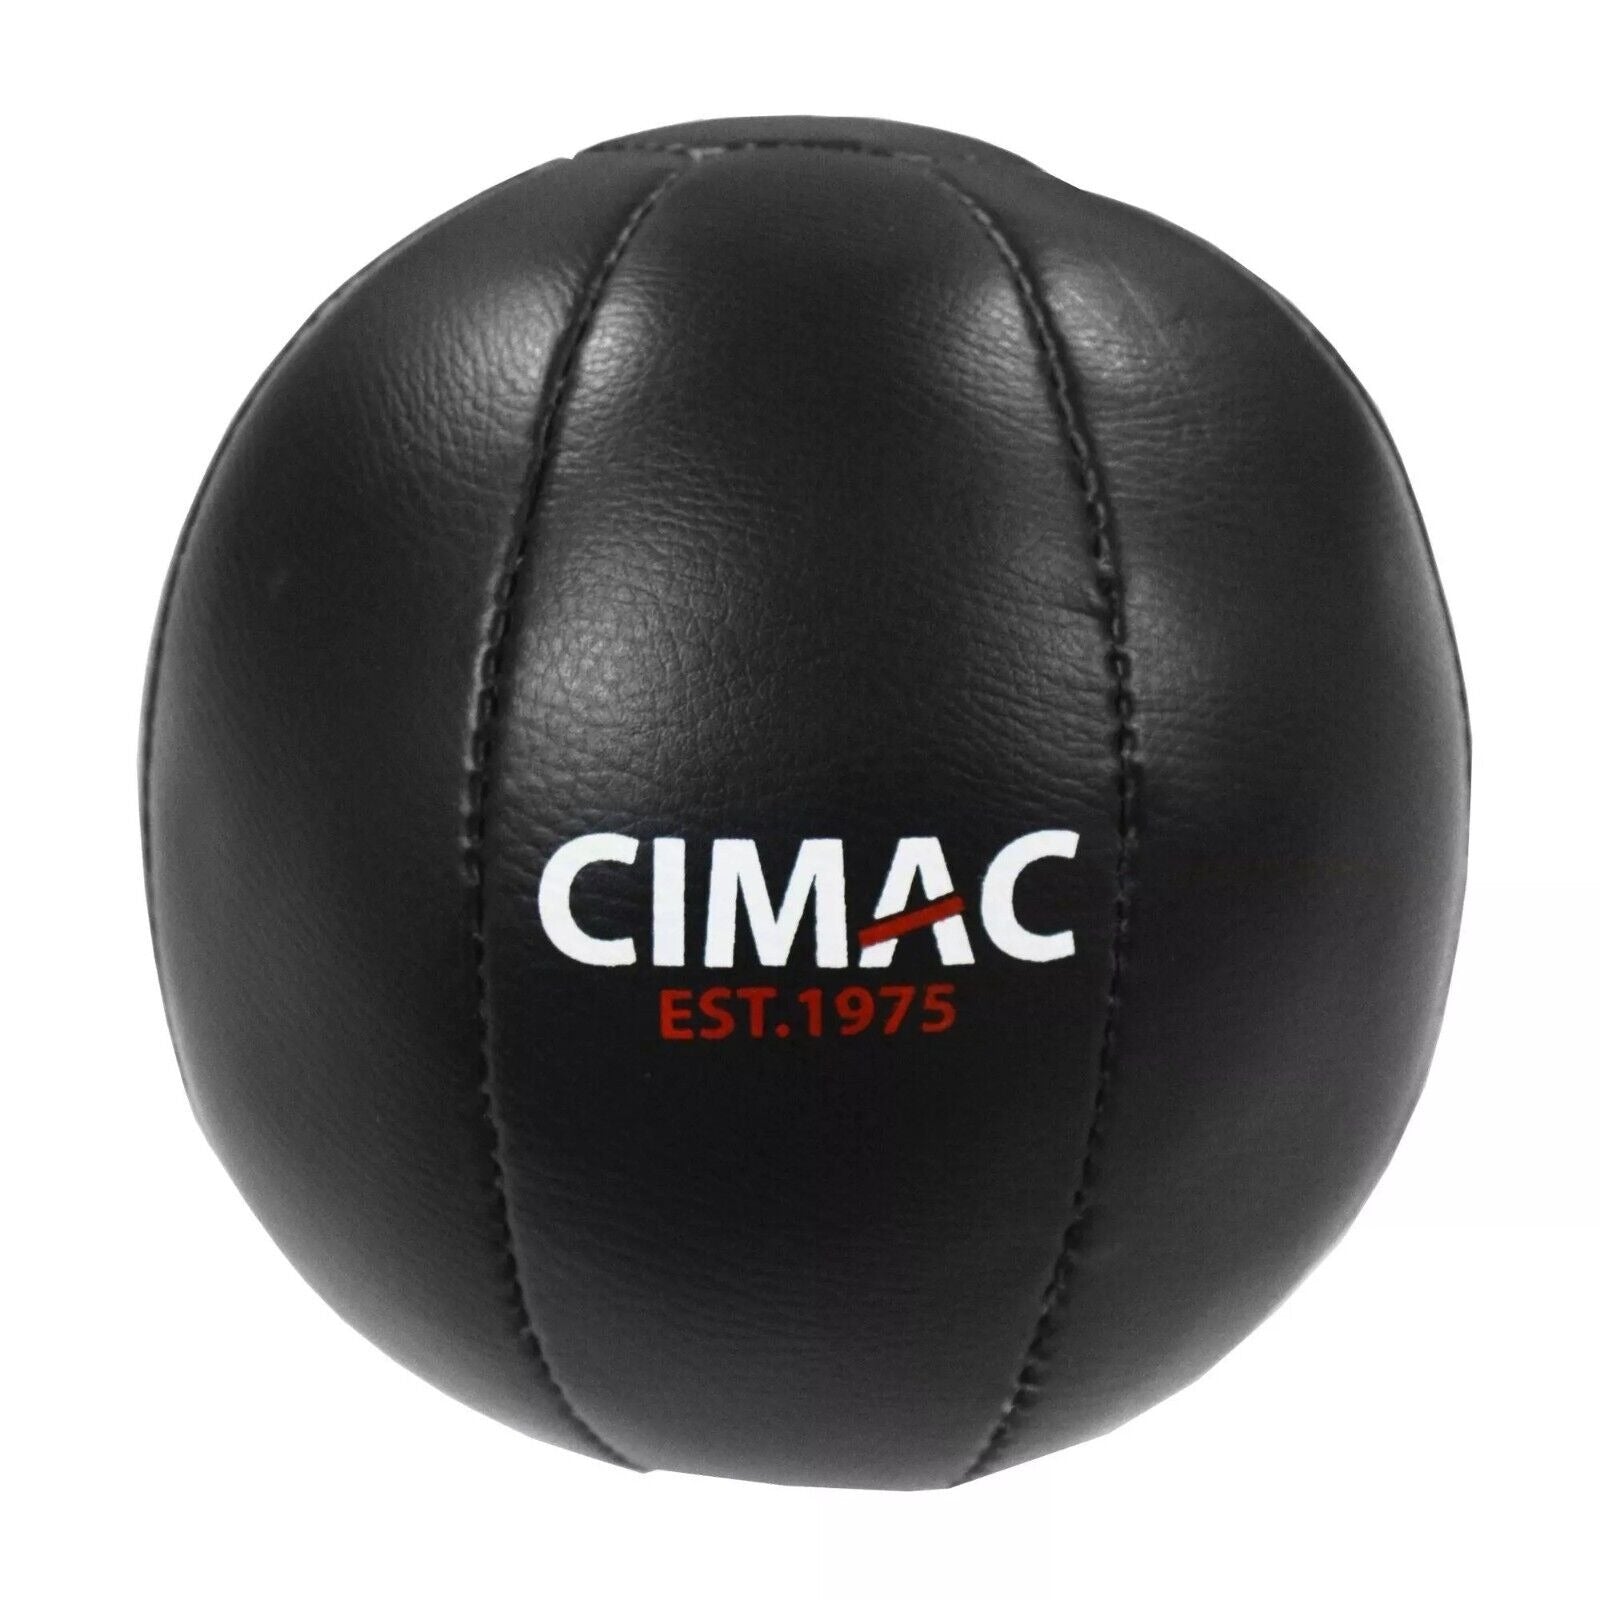 Cimac Medicine Ball 3 or 5.5kg Fitness Gym Boxing MMA